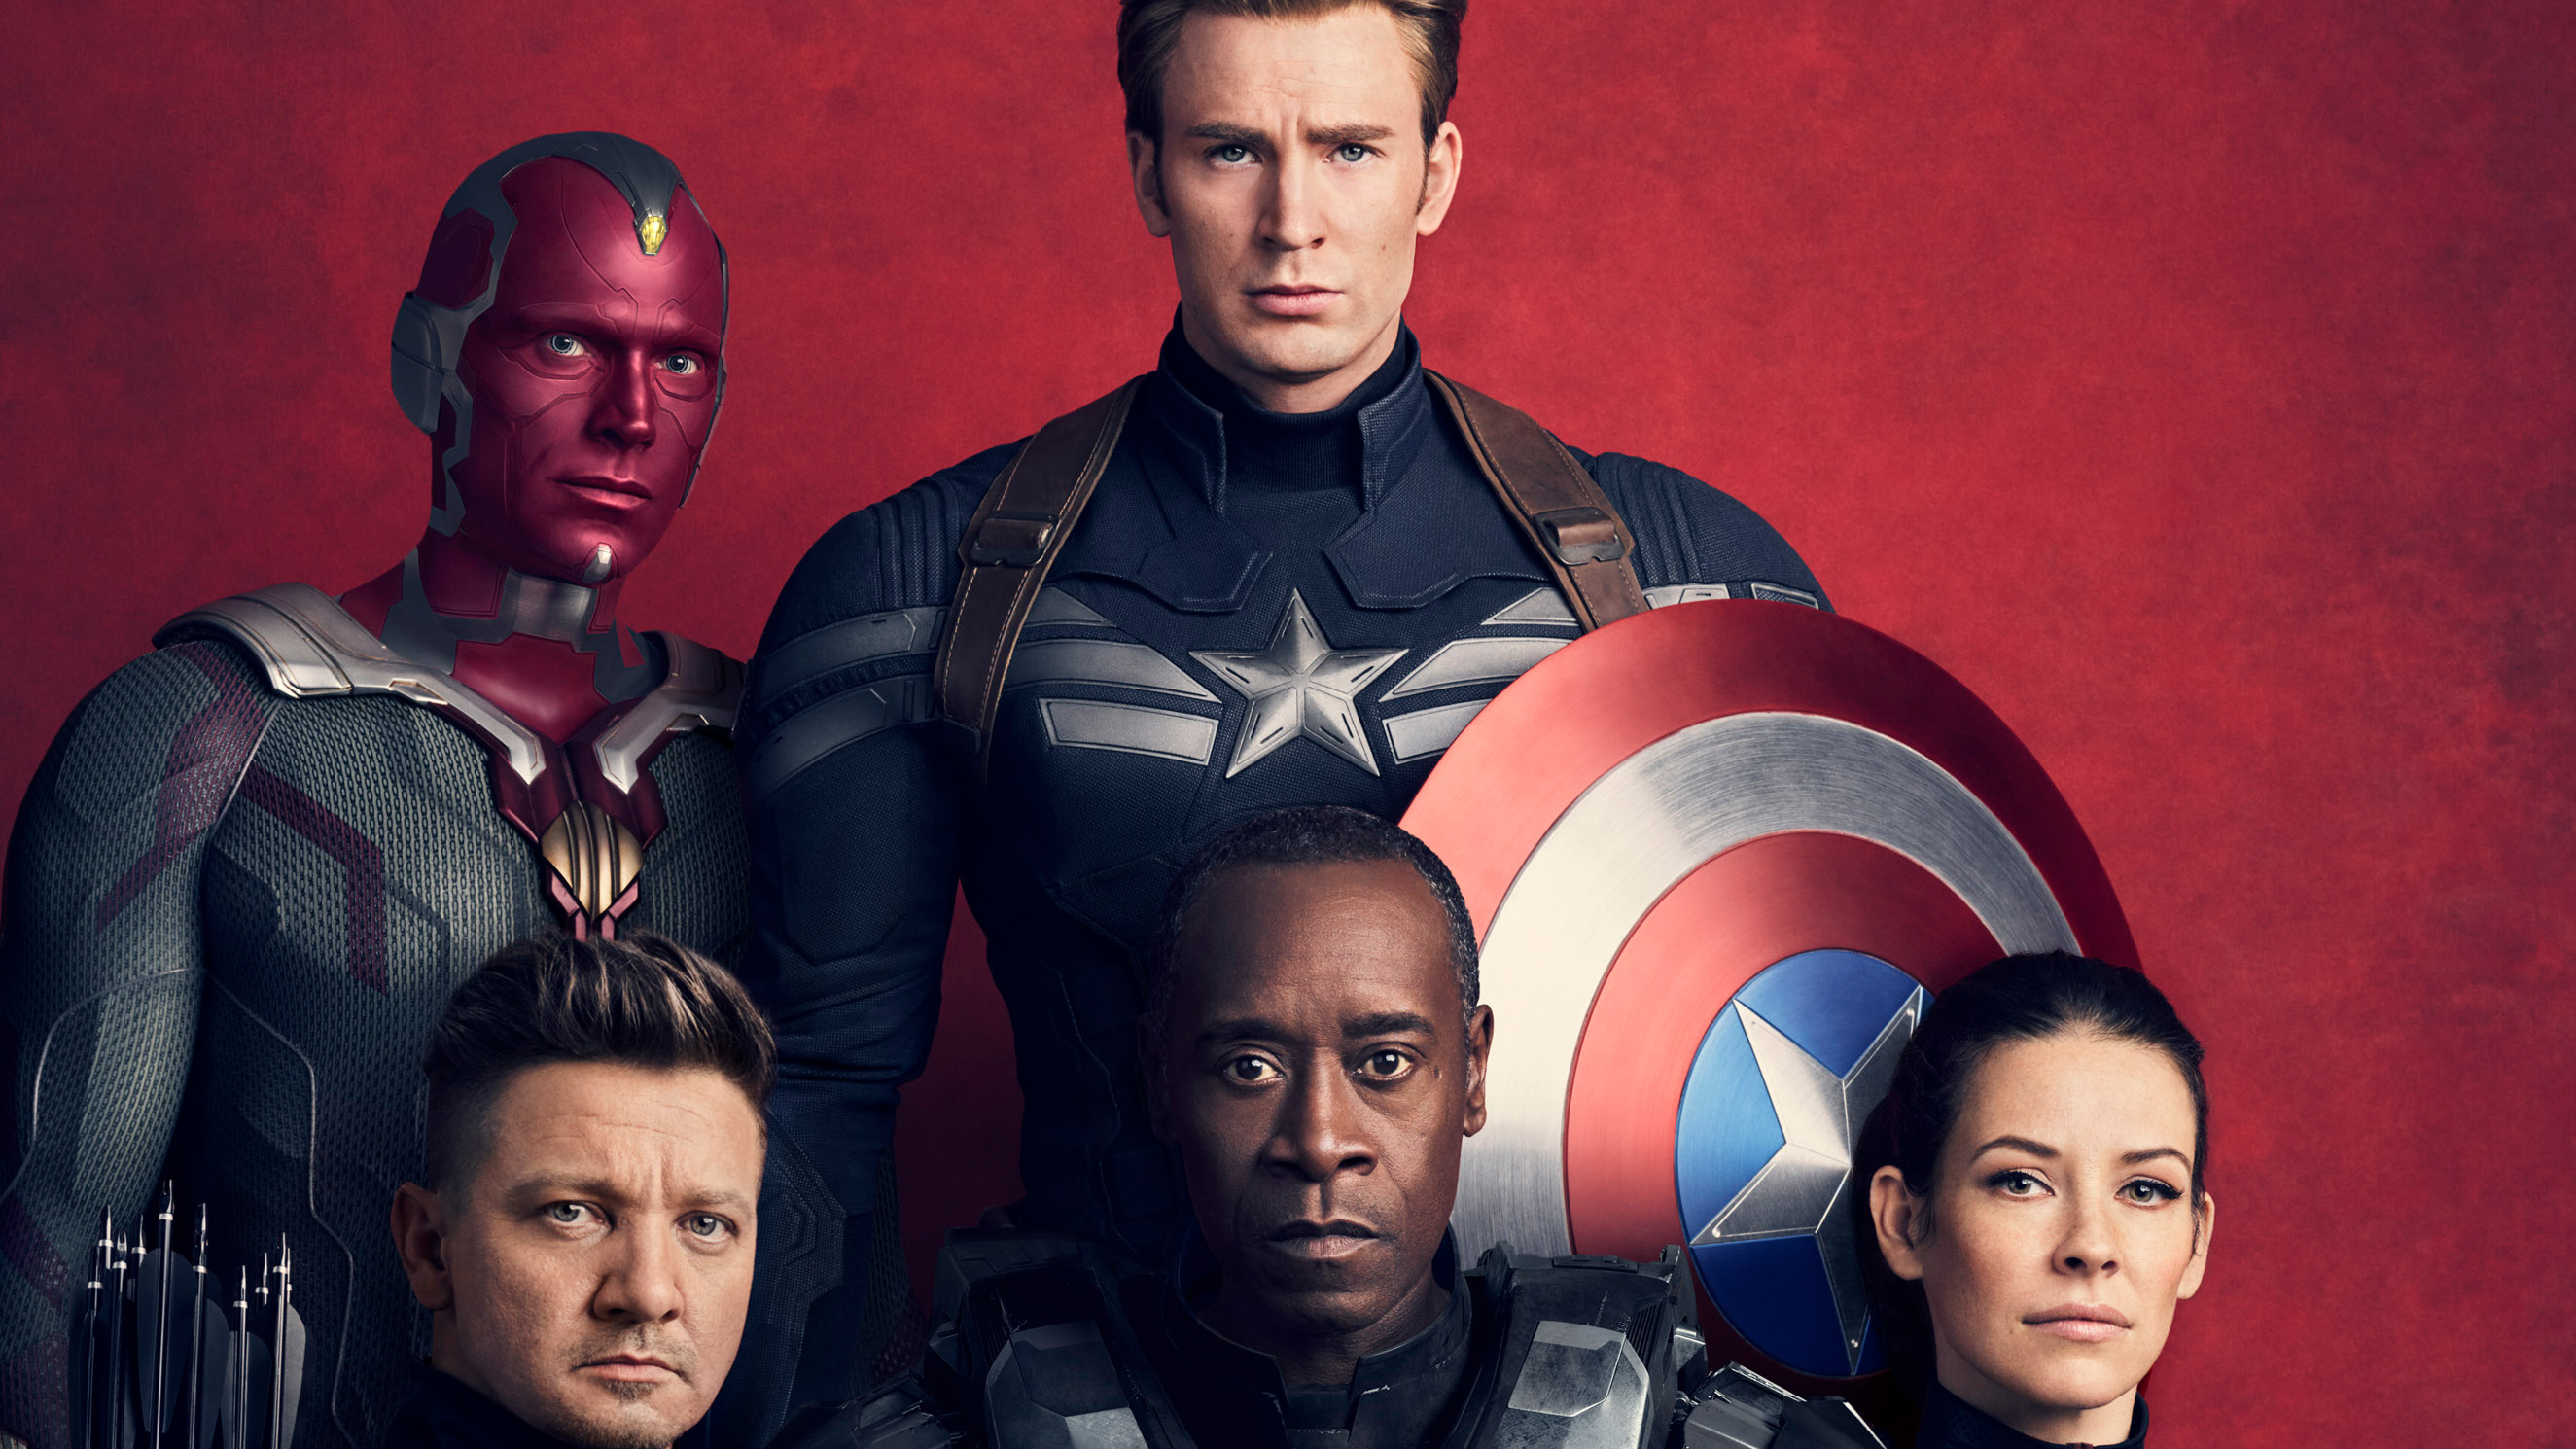 Avengers: Infinity War wallpaper, Iconic heroes, Chris Evans as Captain America, Don Cheadle as War Machine, 2650x1490 HD Desktop